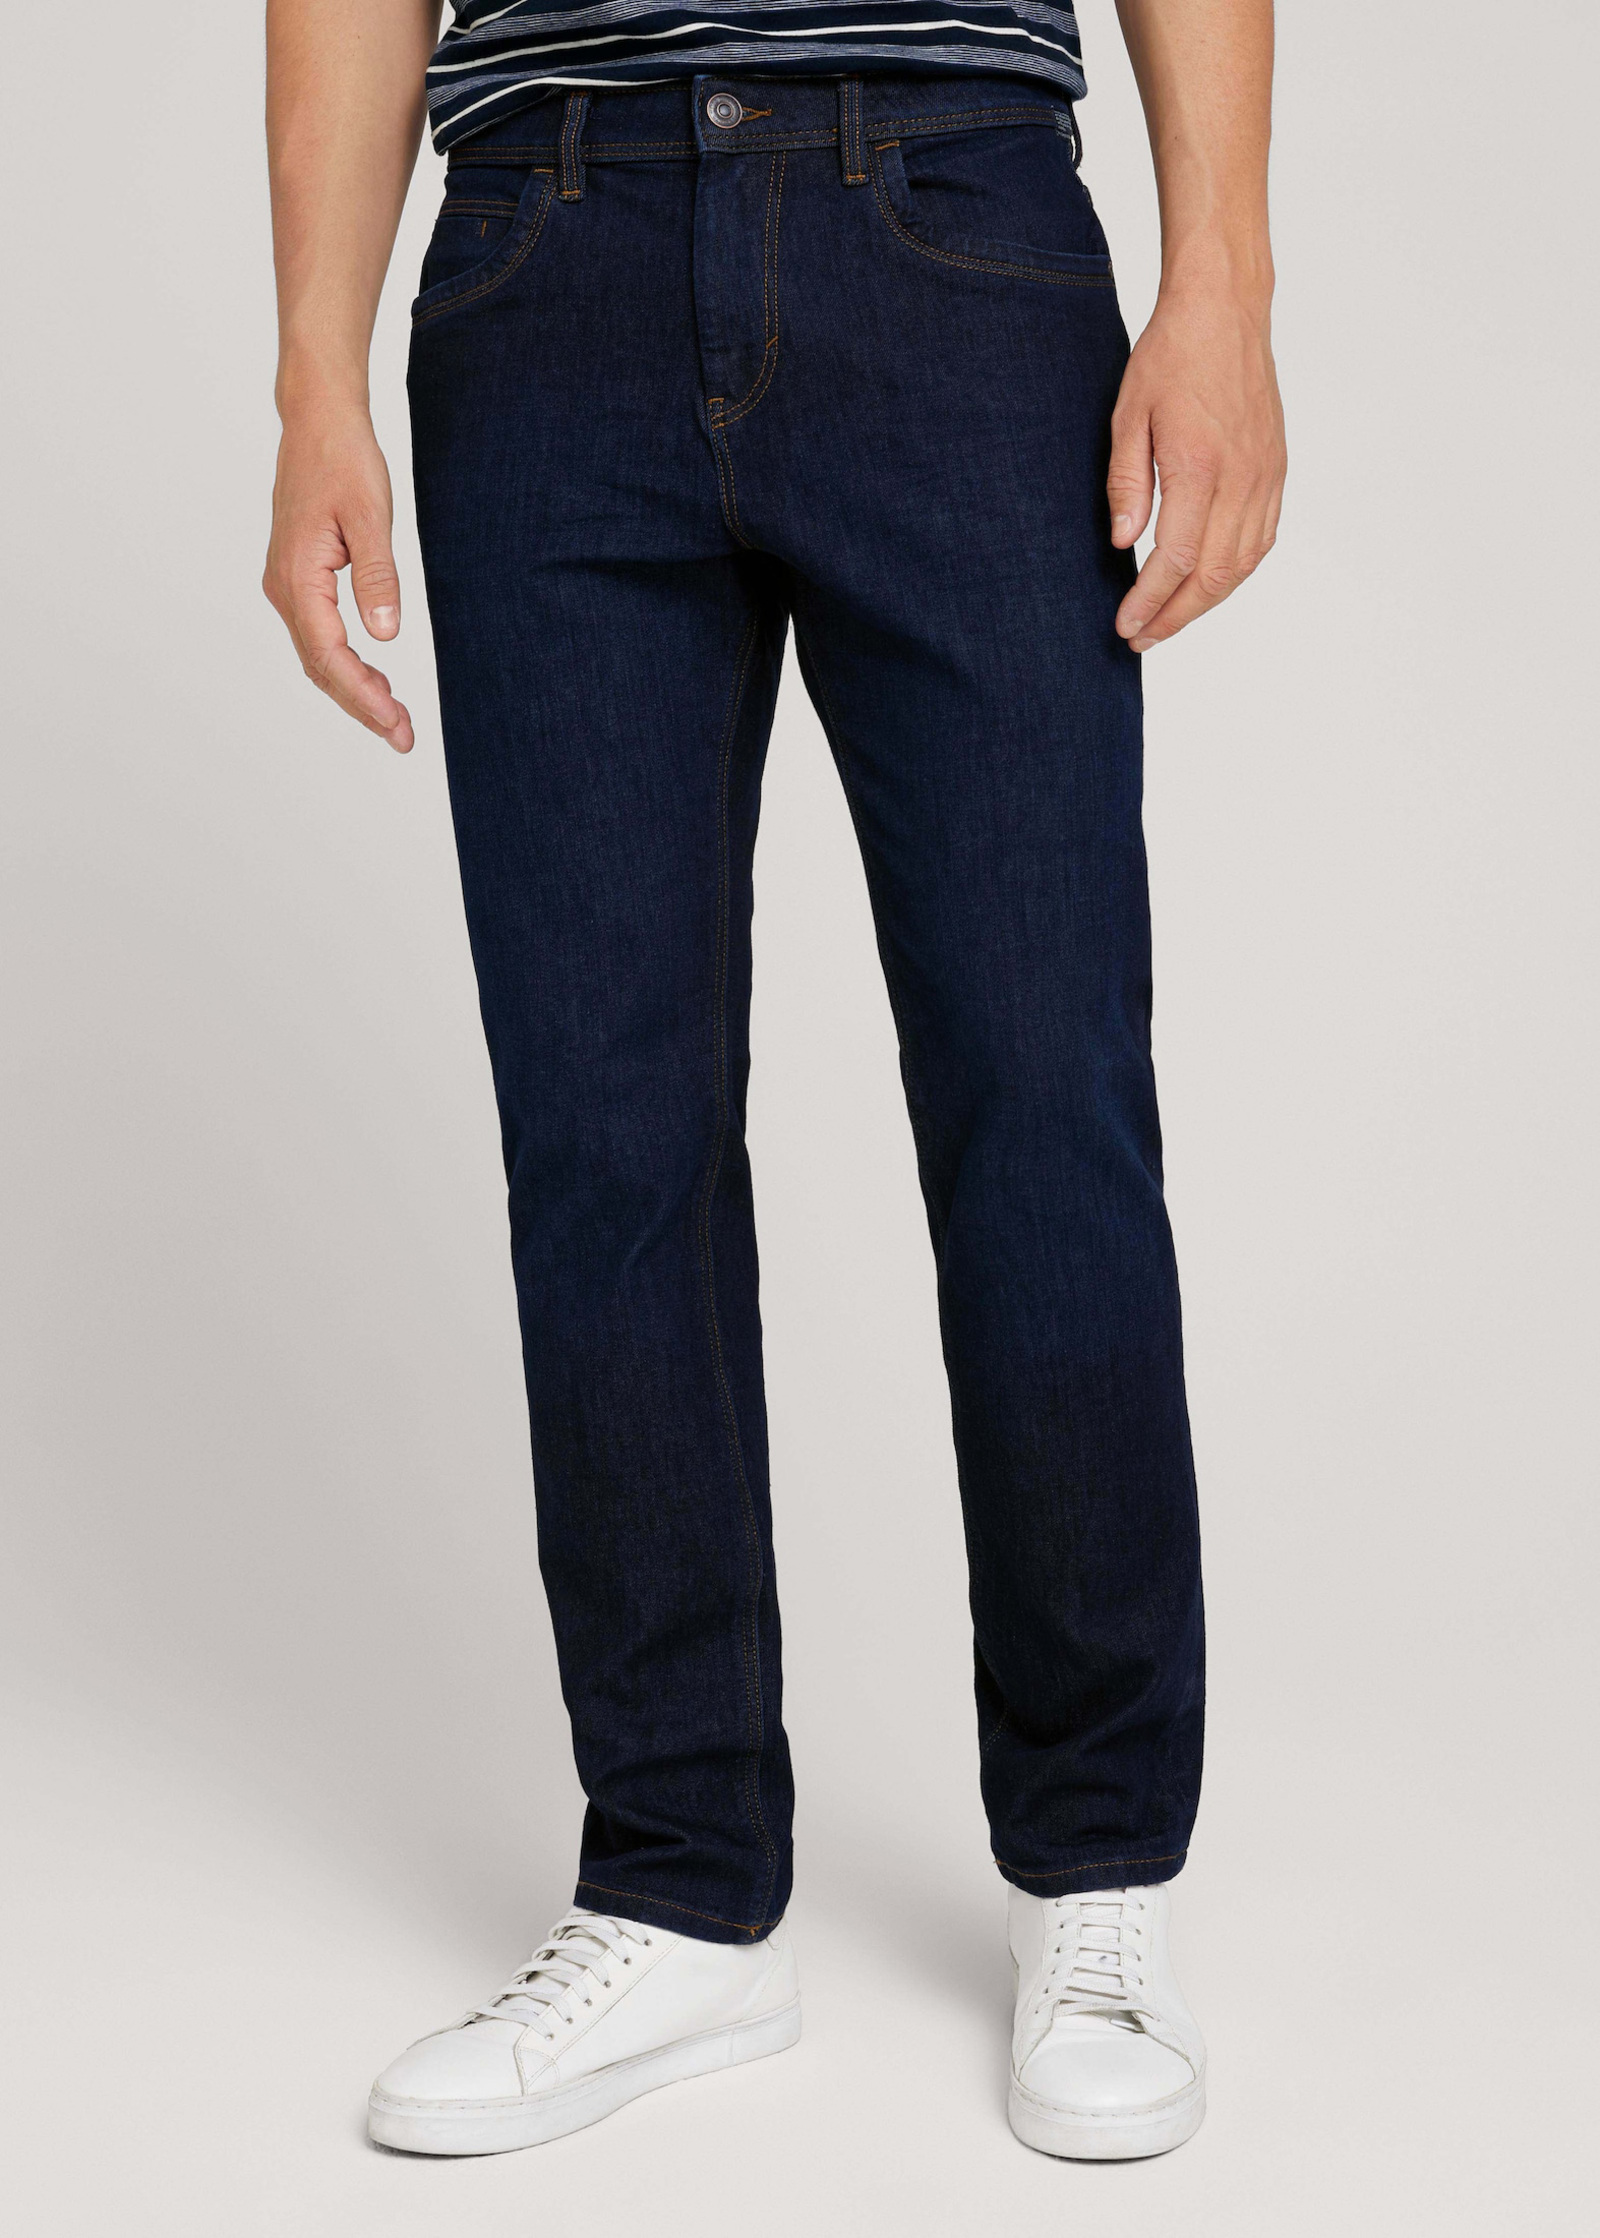 Tom Tailor® Josh Regular Slim Jeans - Rinsed Blue Denim Size 32/32